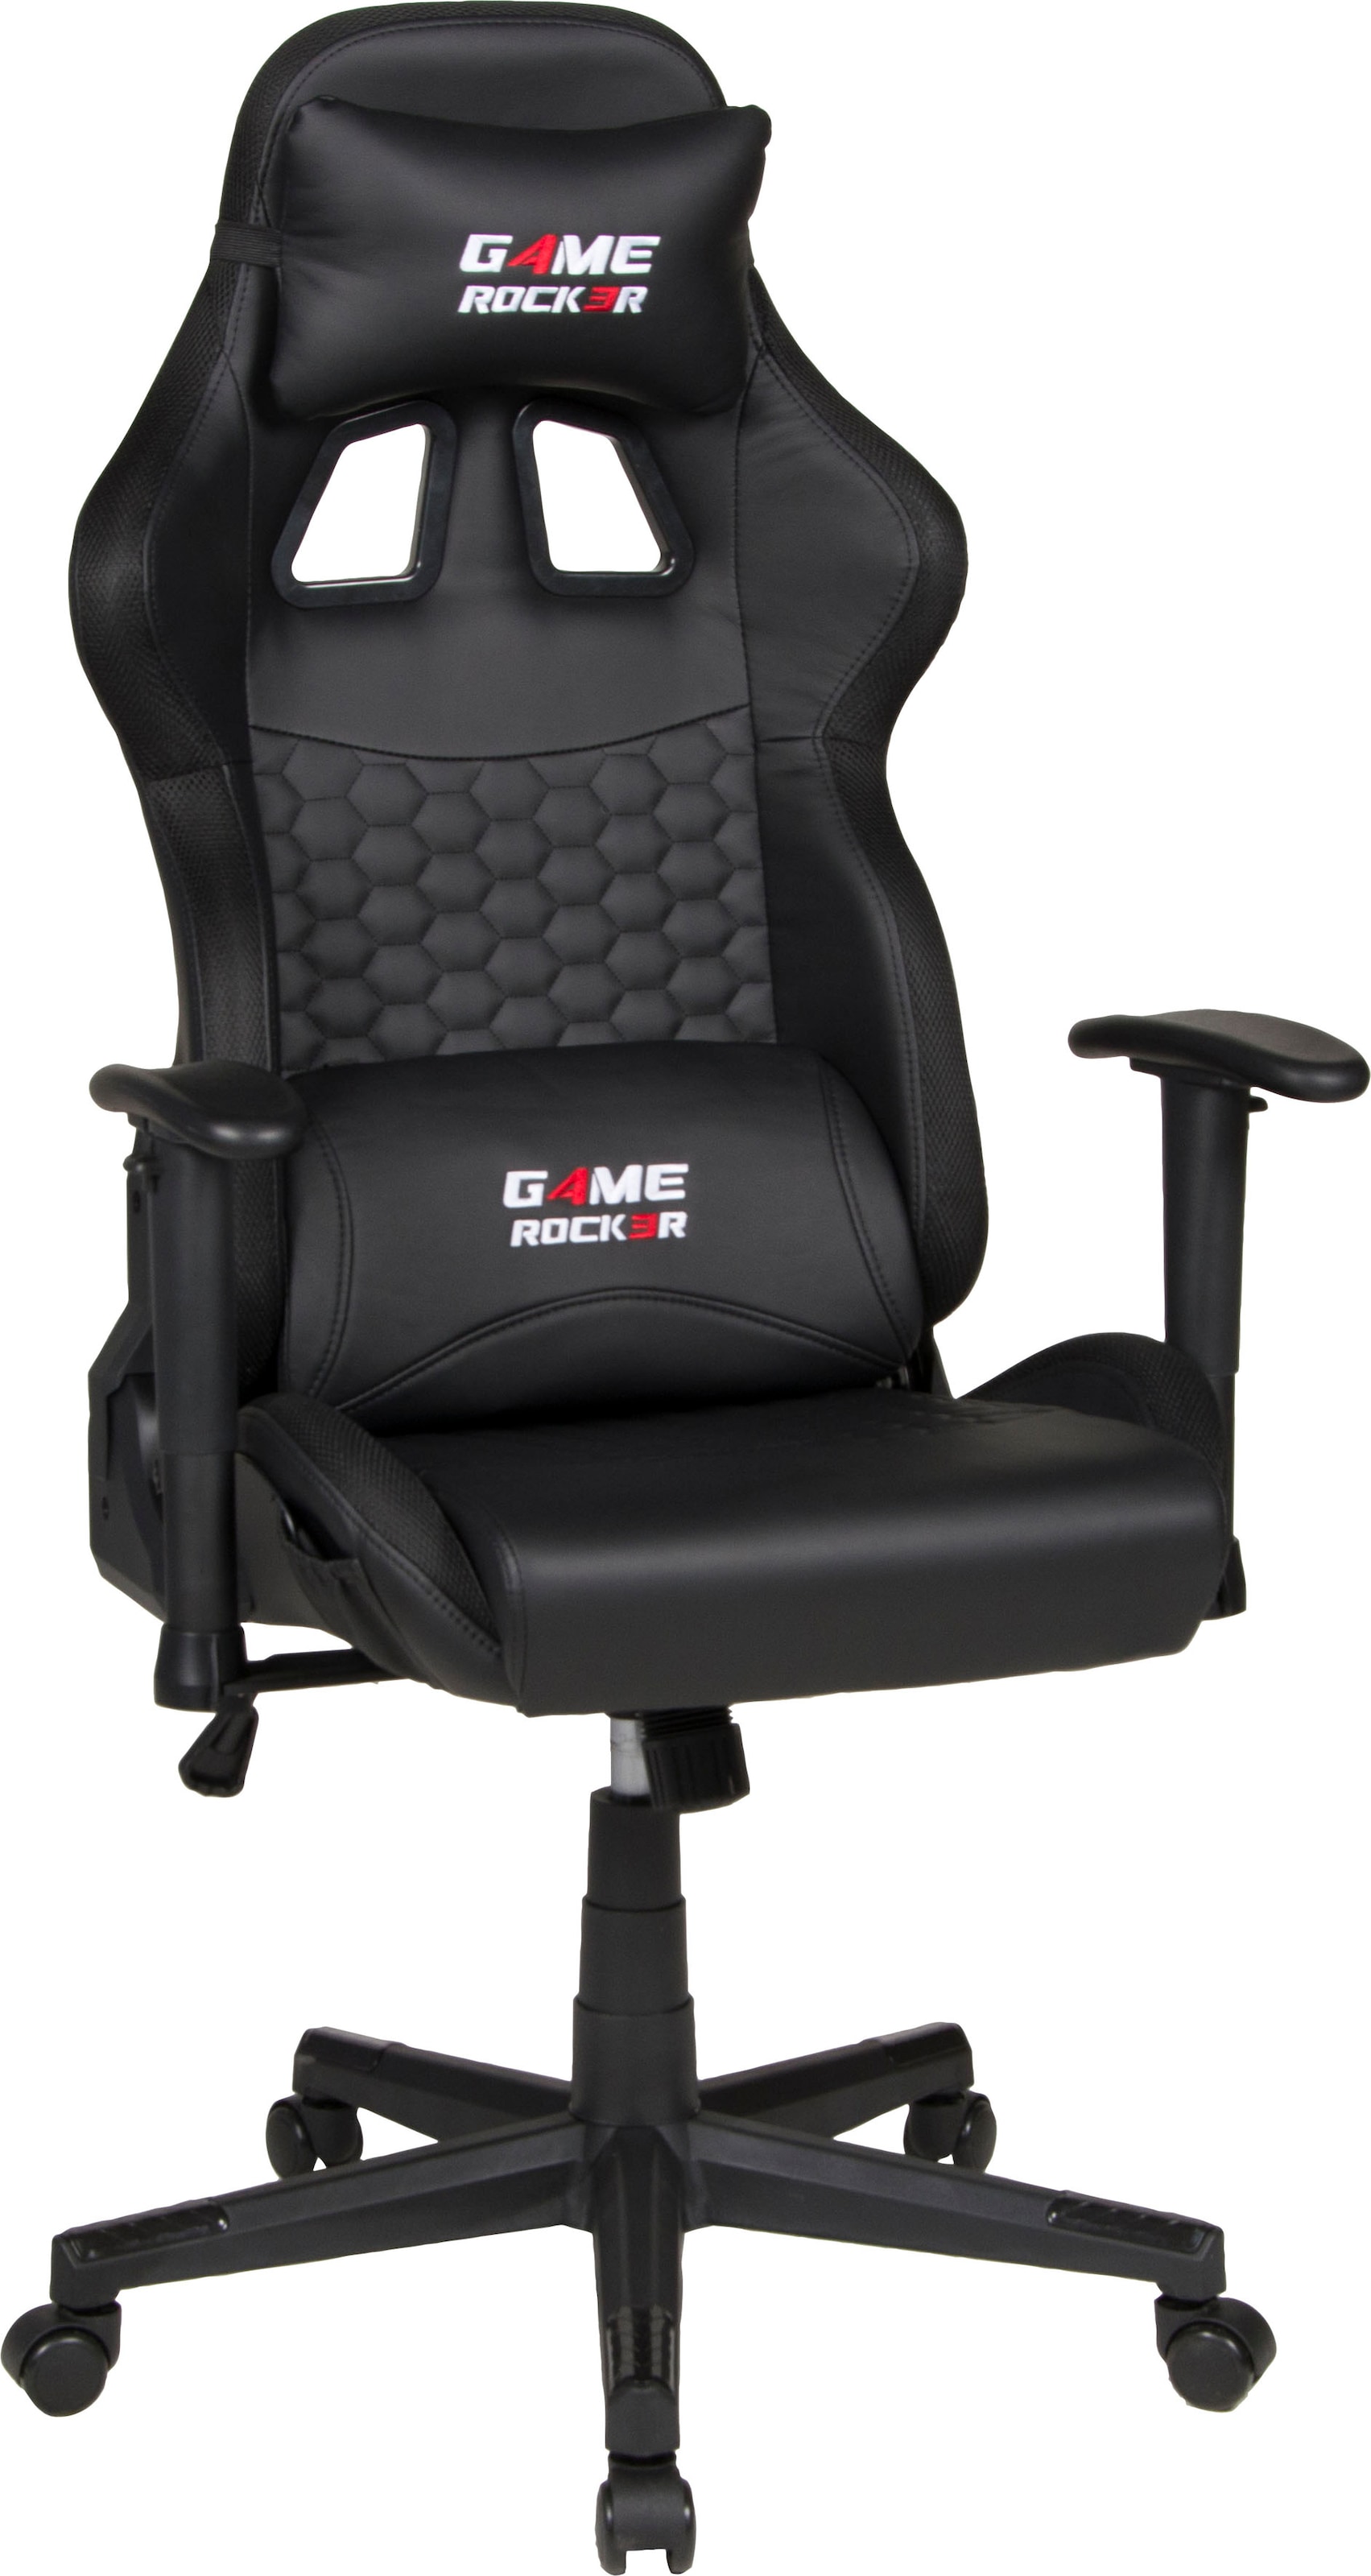 Duo Collection bequem kaufen LED Chair Wechselbeleuchtung mit »Game-Rocker Gaming G-10 Kunstleder-Netzstoff, Chefsessel LED«